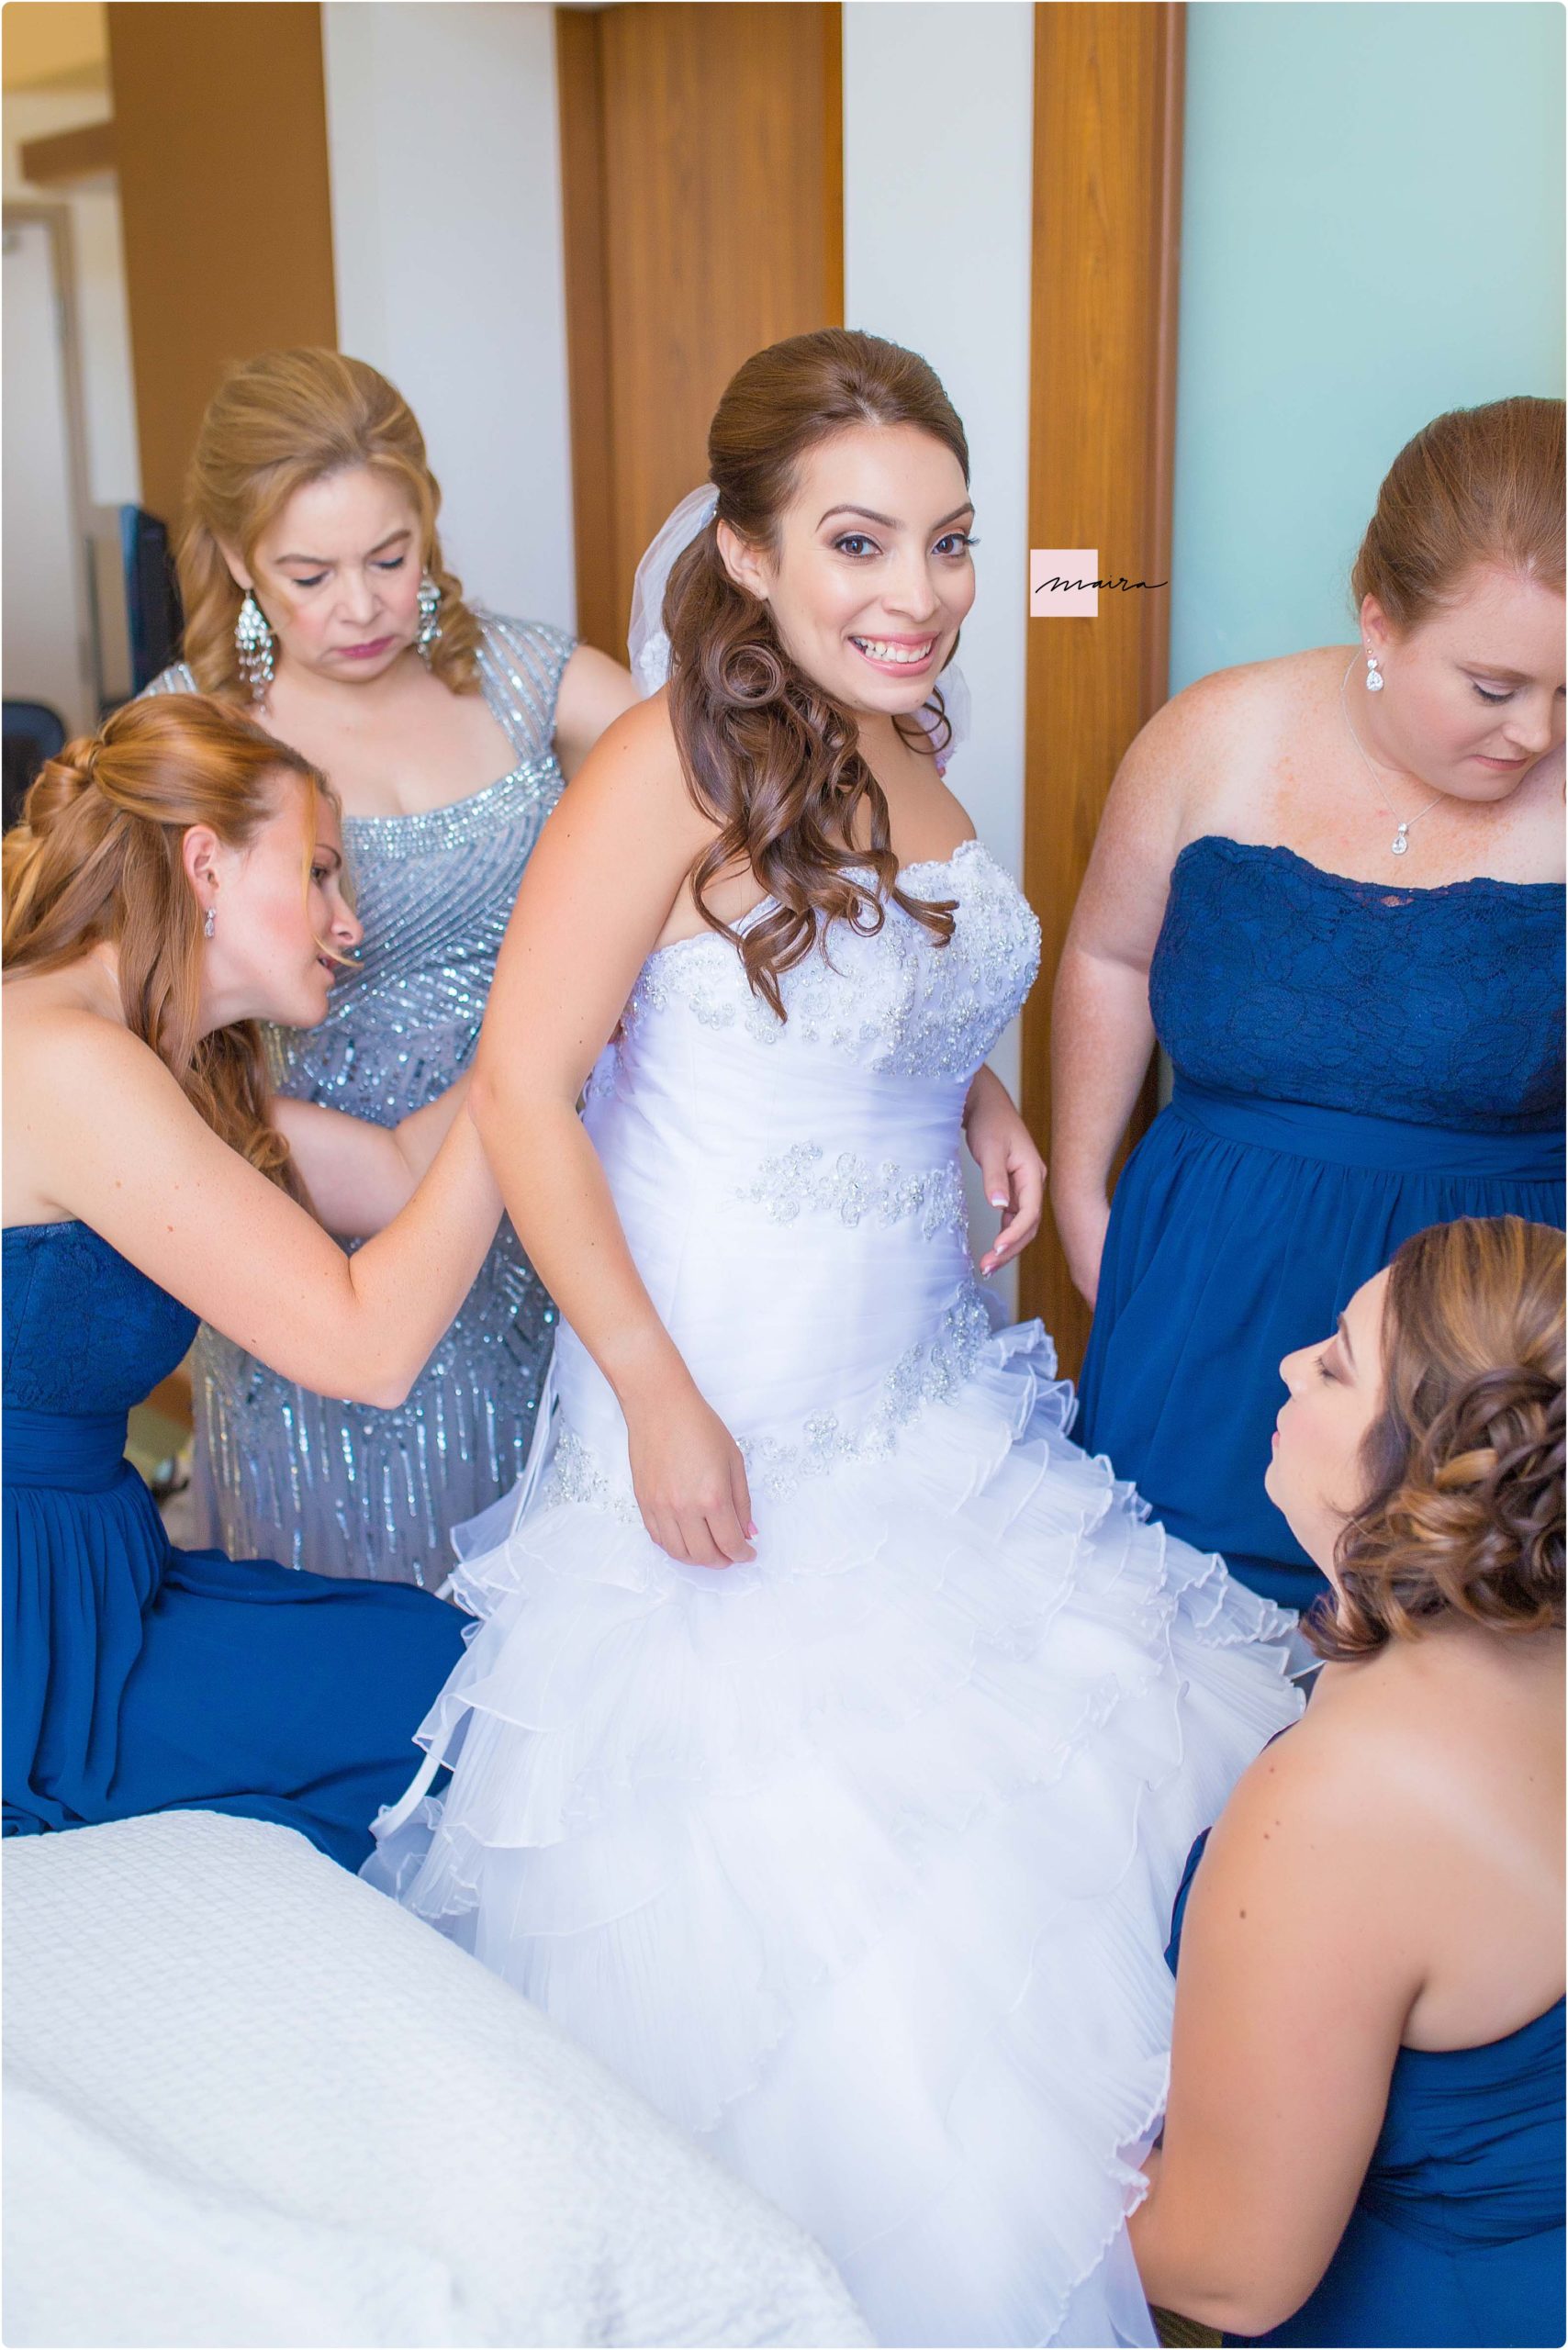 Blue brides high heels, Wedding details, brides earnings, Bride Getting ready, Brides Makeup artist, Wedding Dress, Wedding ring, Brides wedding ring, wedding band, bride, bridesmaids